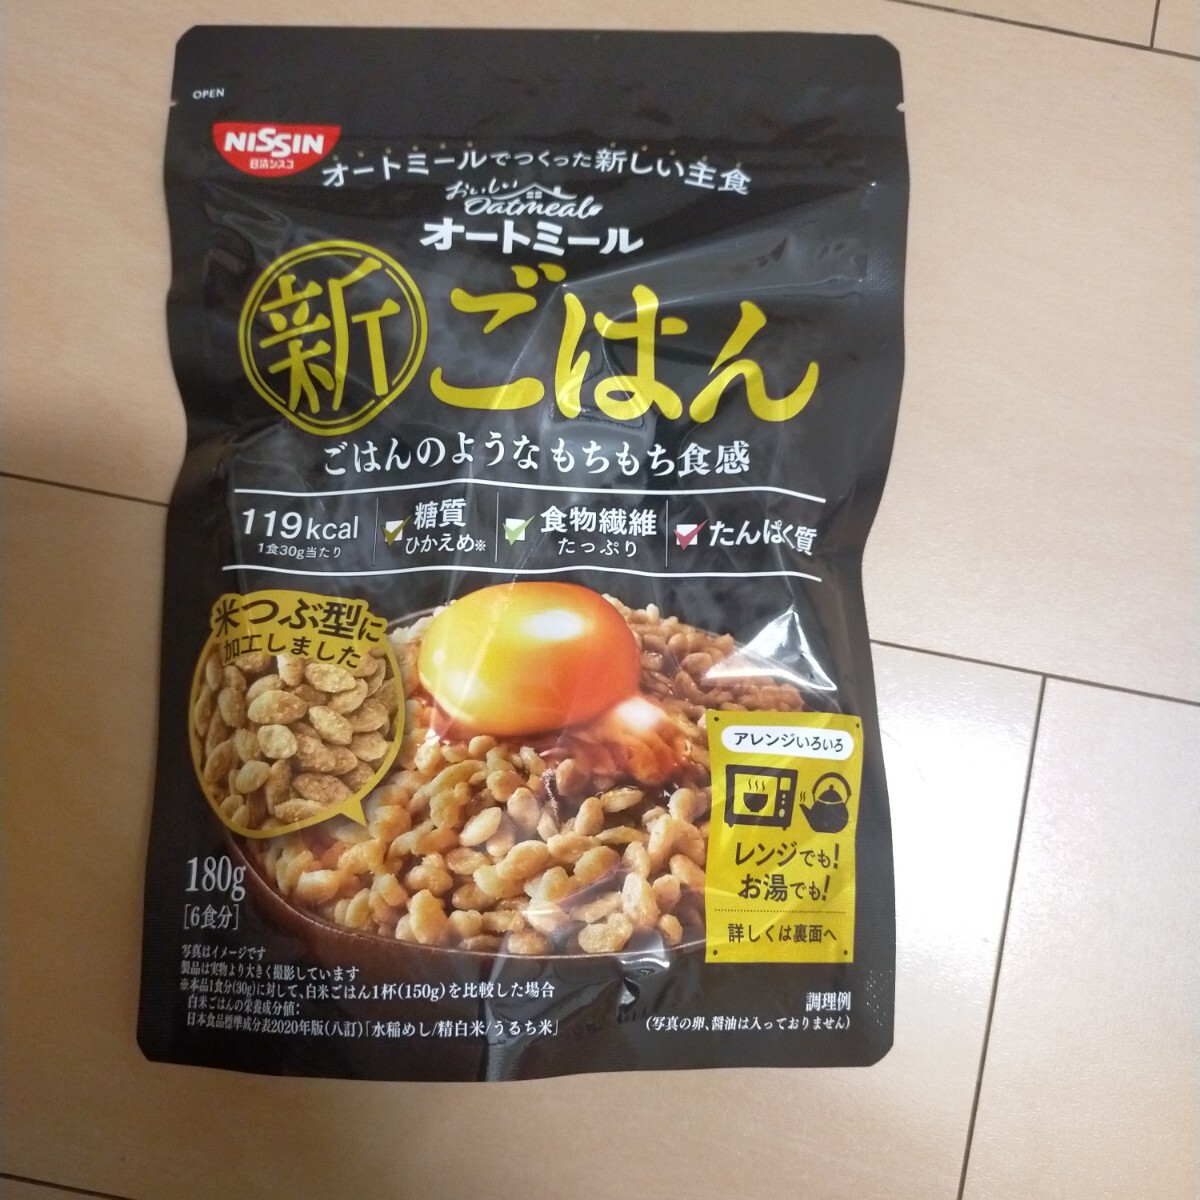  auto mi-ru new . is . day Kiyoshi 6 meal minute new goods auto mi-ru day Kiyoshi Cisco protein sugar quality .... cellulose 